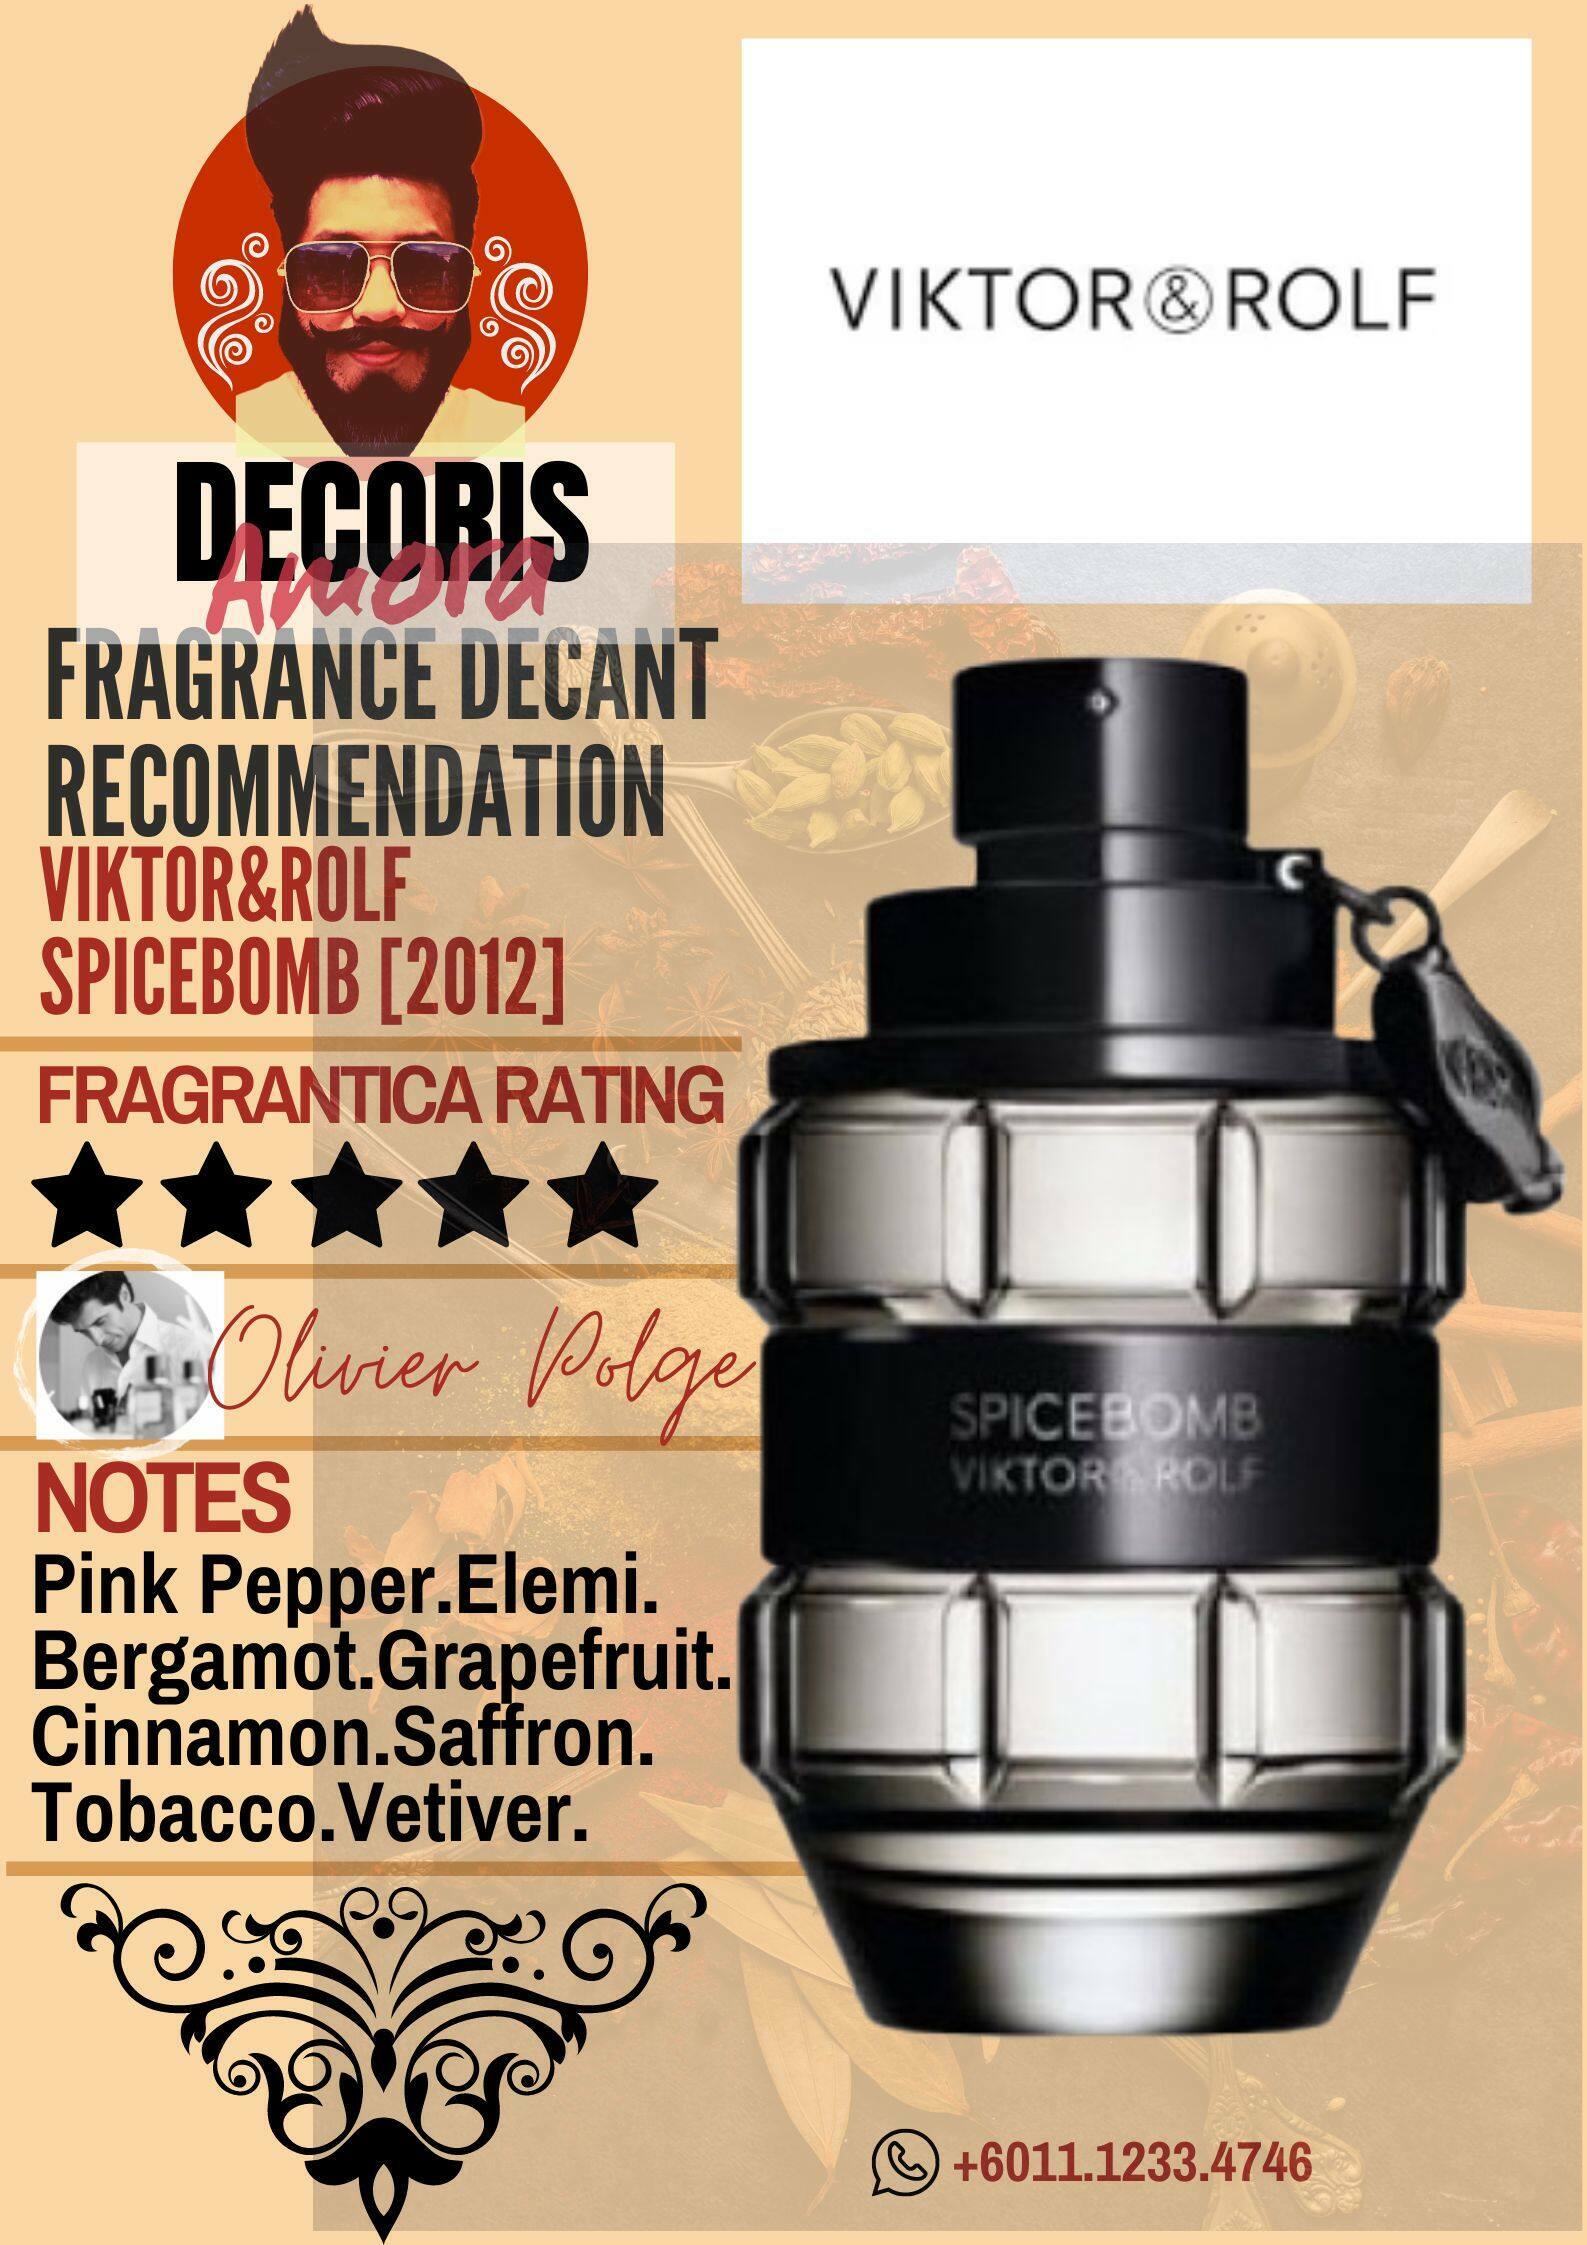 Viktor & Rolf Spicebomb - Perfume Decant – Decoris Amora Perfume Decant